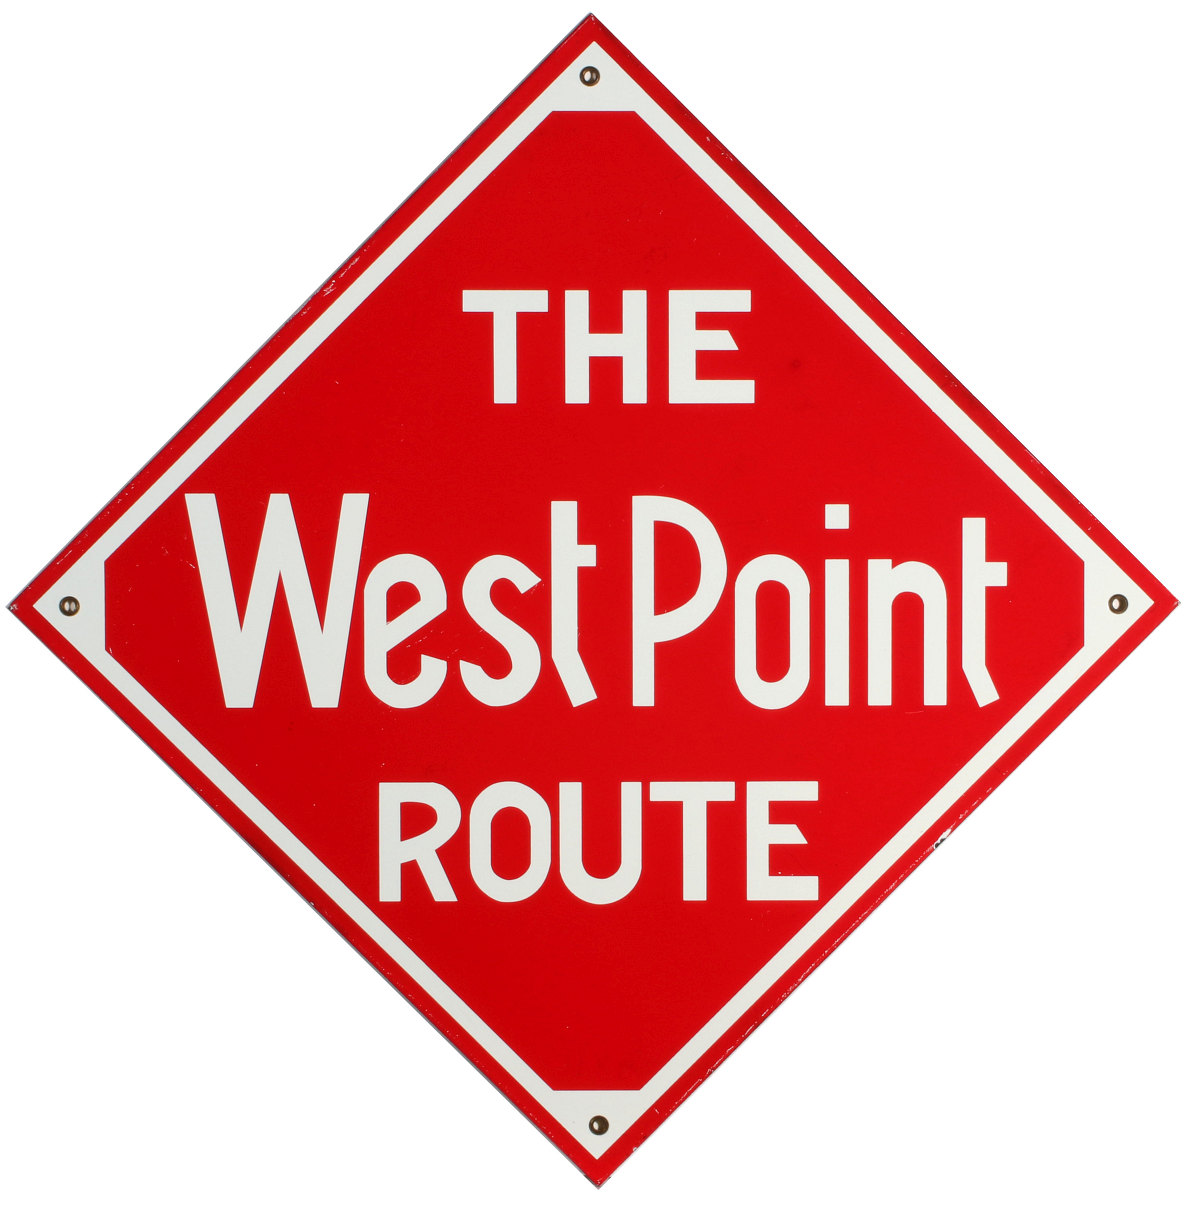 THE WEST POINT ROUTE RAILROAD LOGO PORCELAIN SIGN